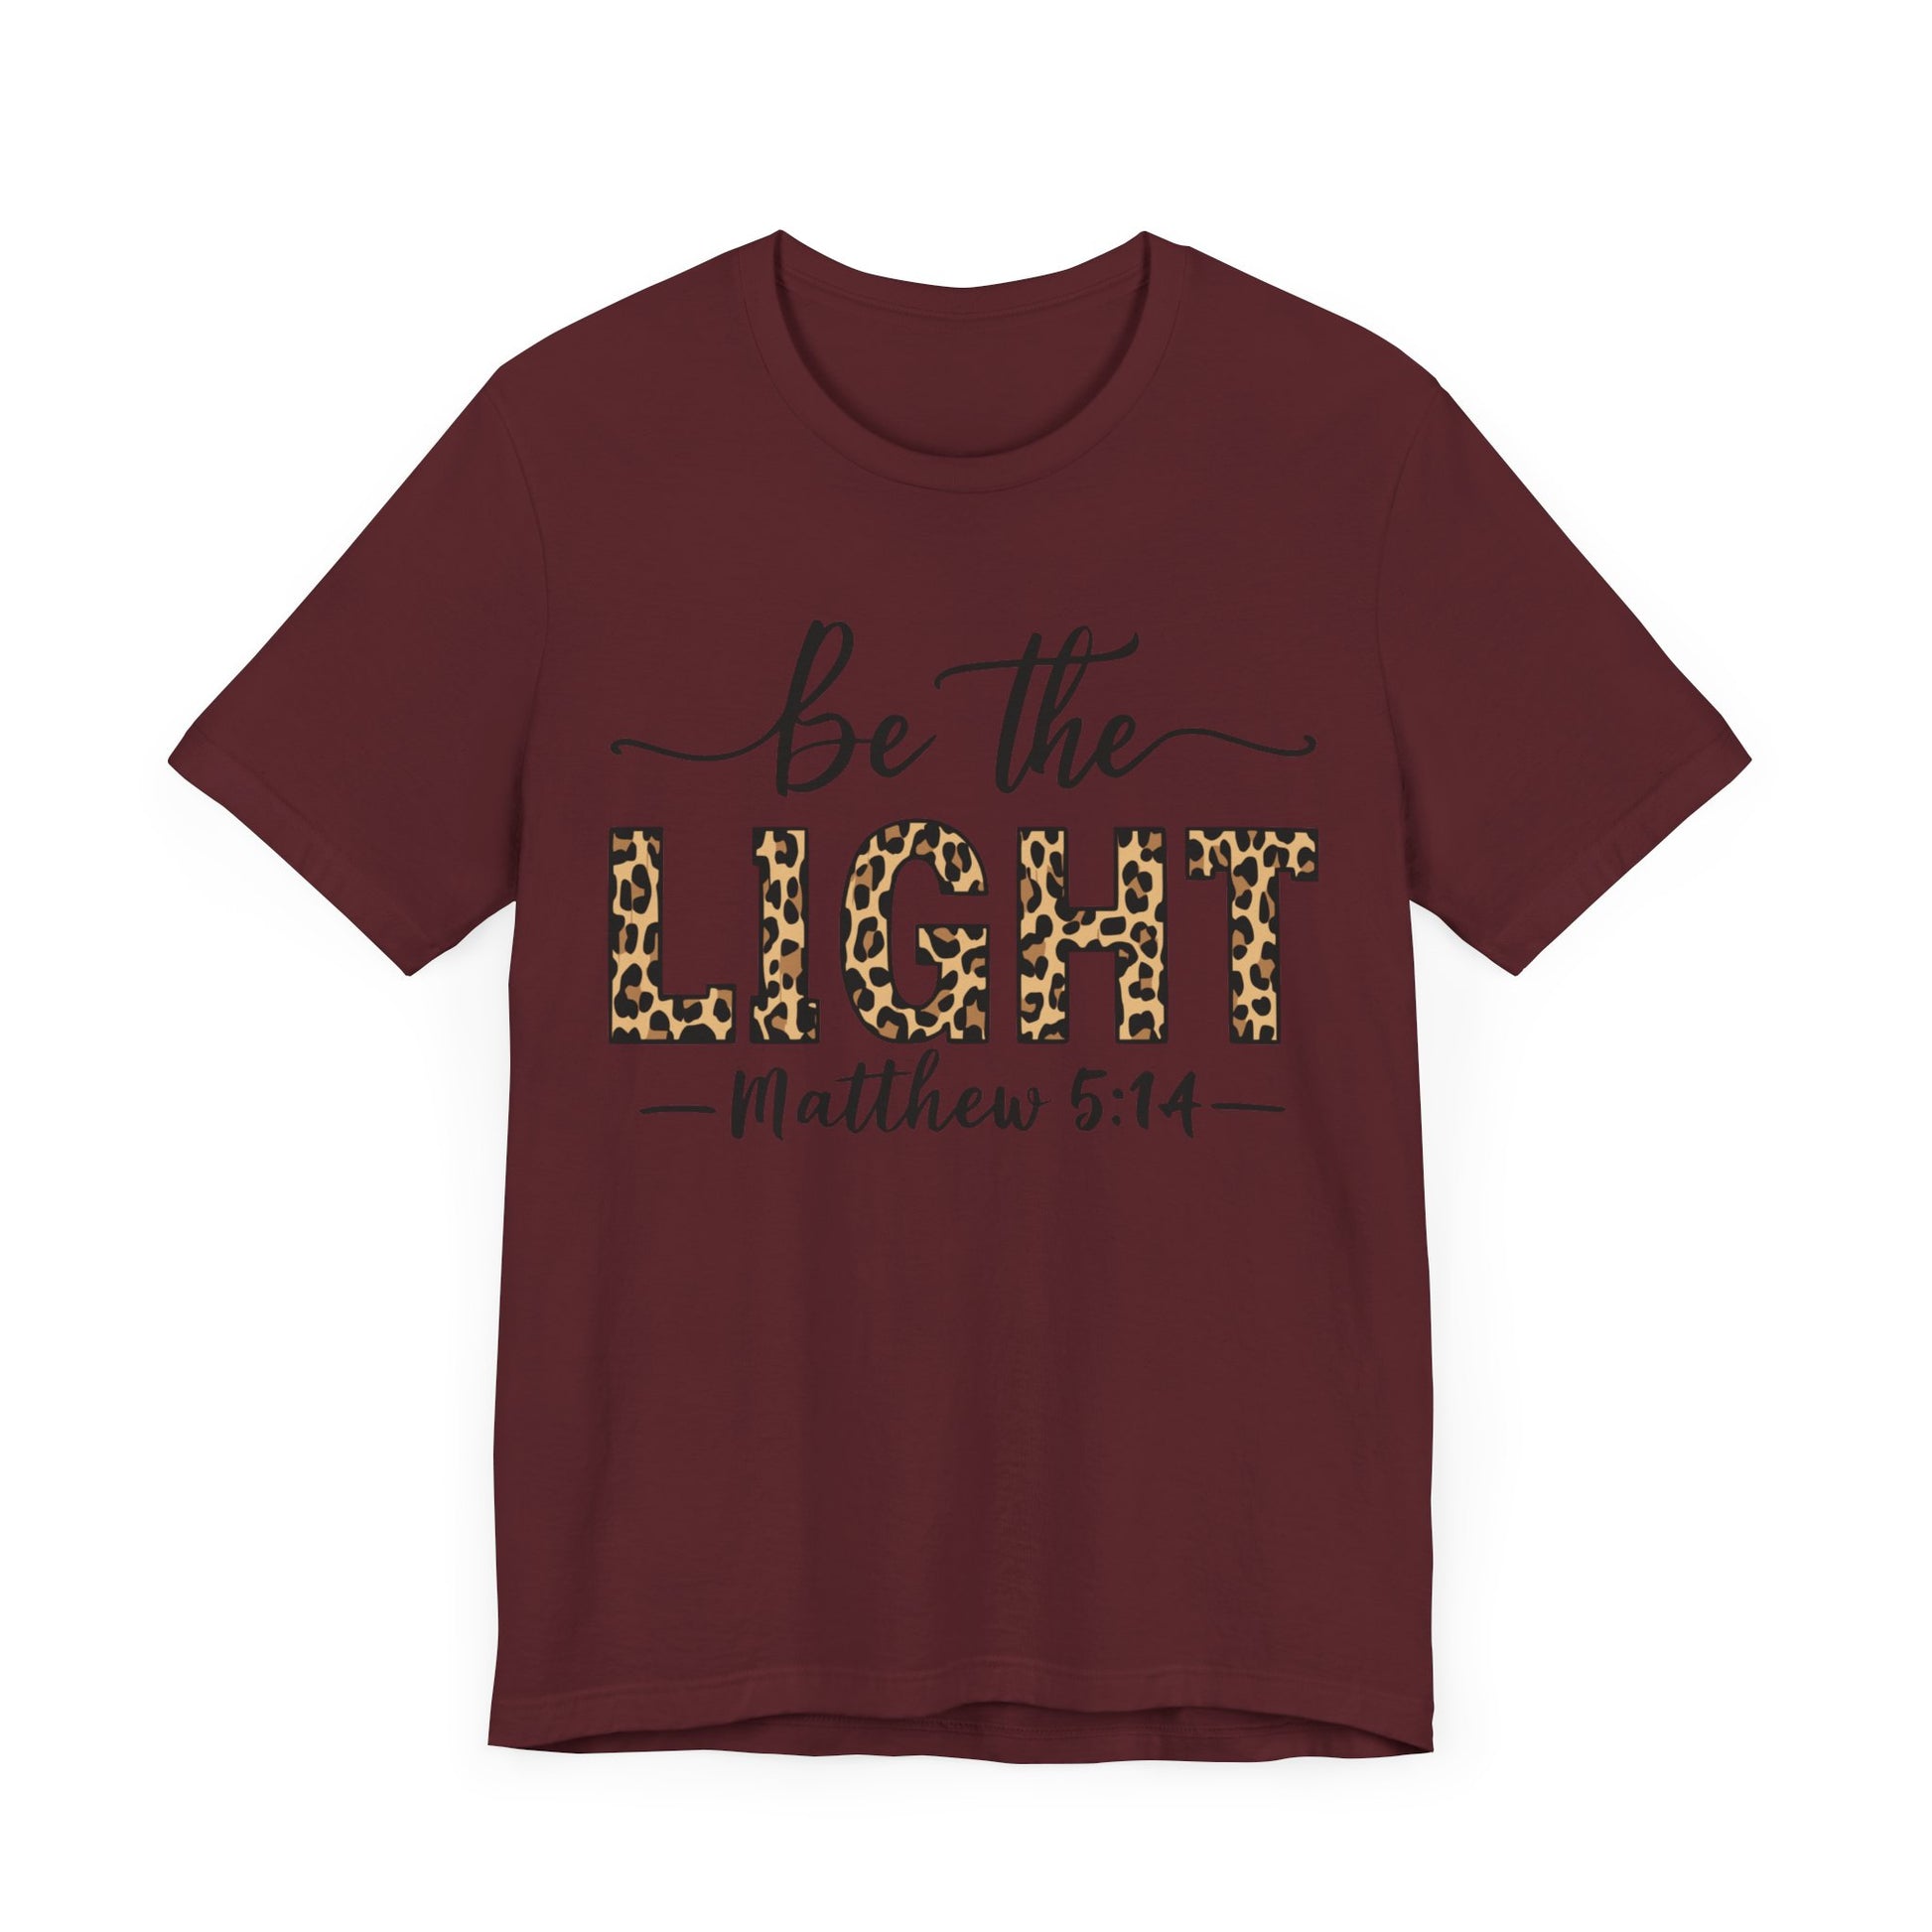 "Faith-Based Fashionable T-Shirt with Biblical Verse"